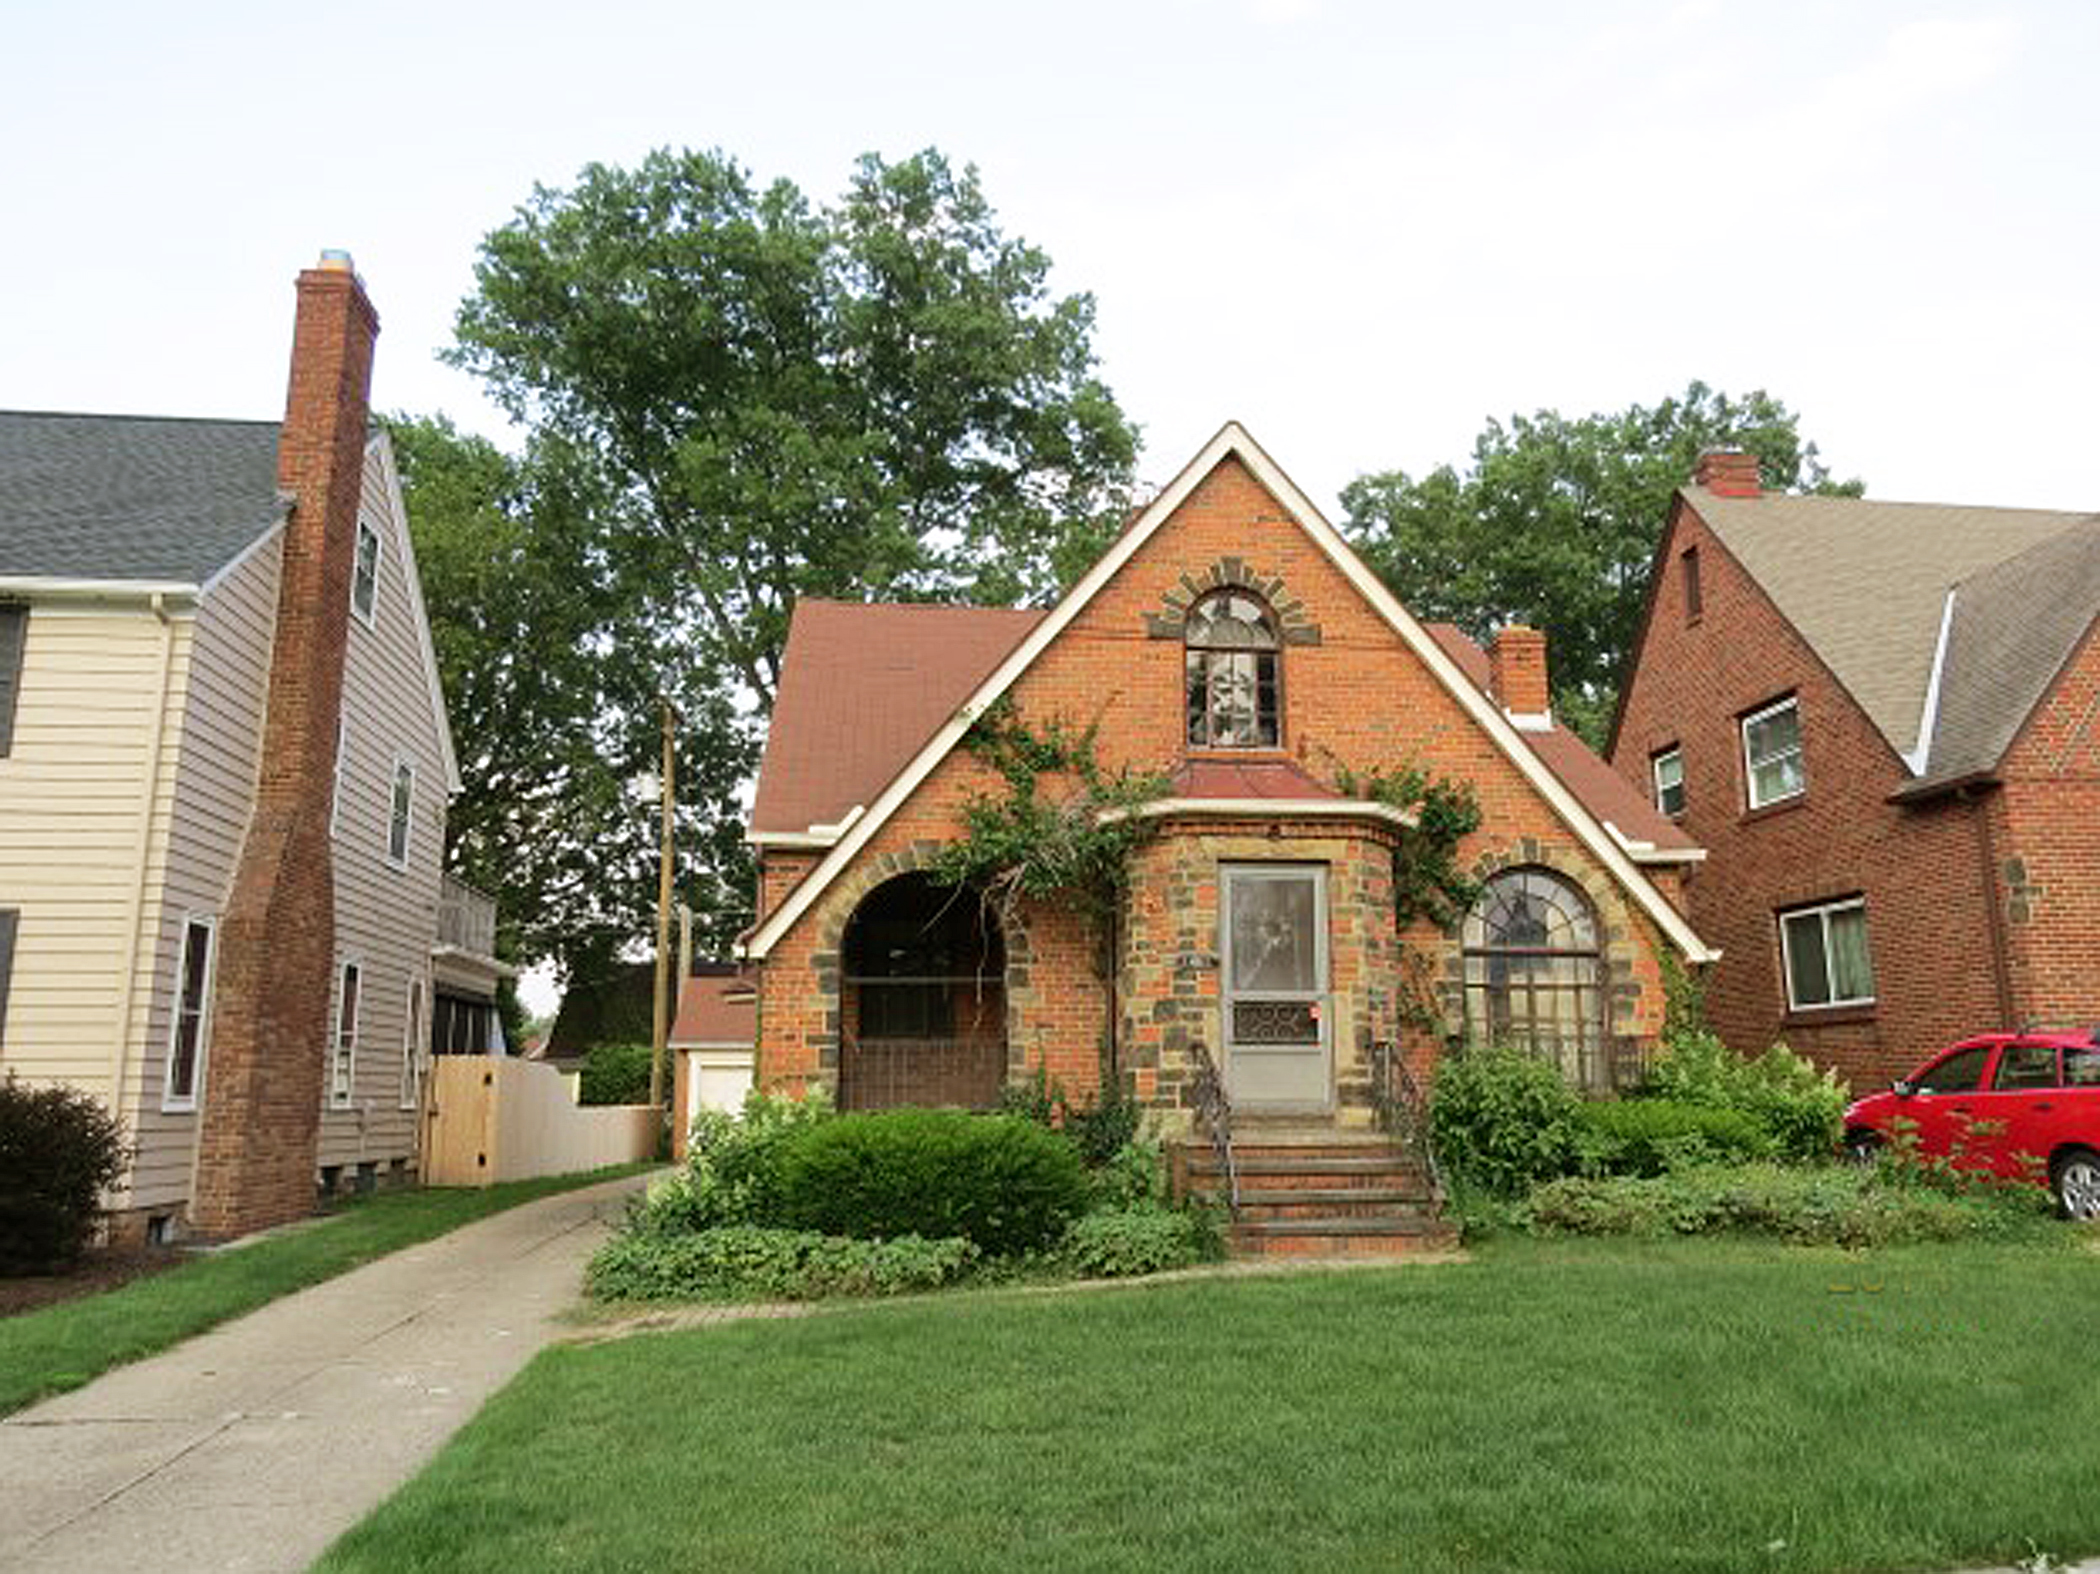 7. Lakewood, Ohio 
                            Pop.: 51,871 | Median Home Price: $97,000 | Home Price Increase: 25%